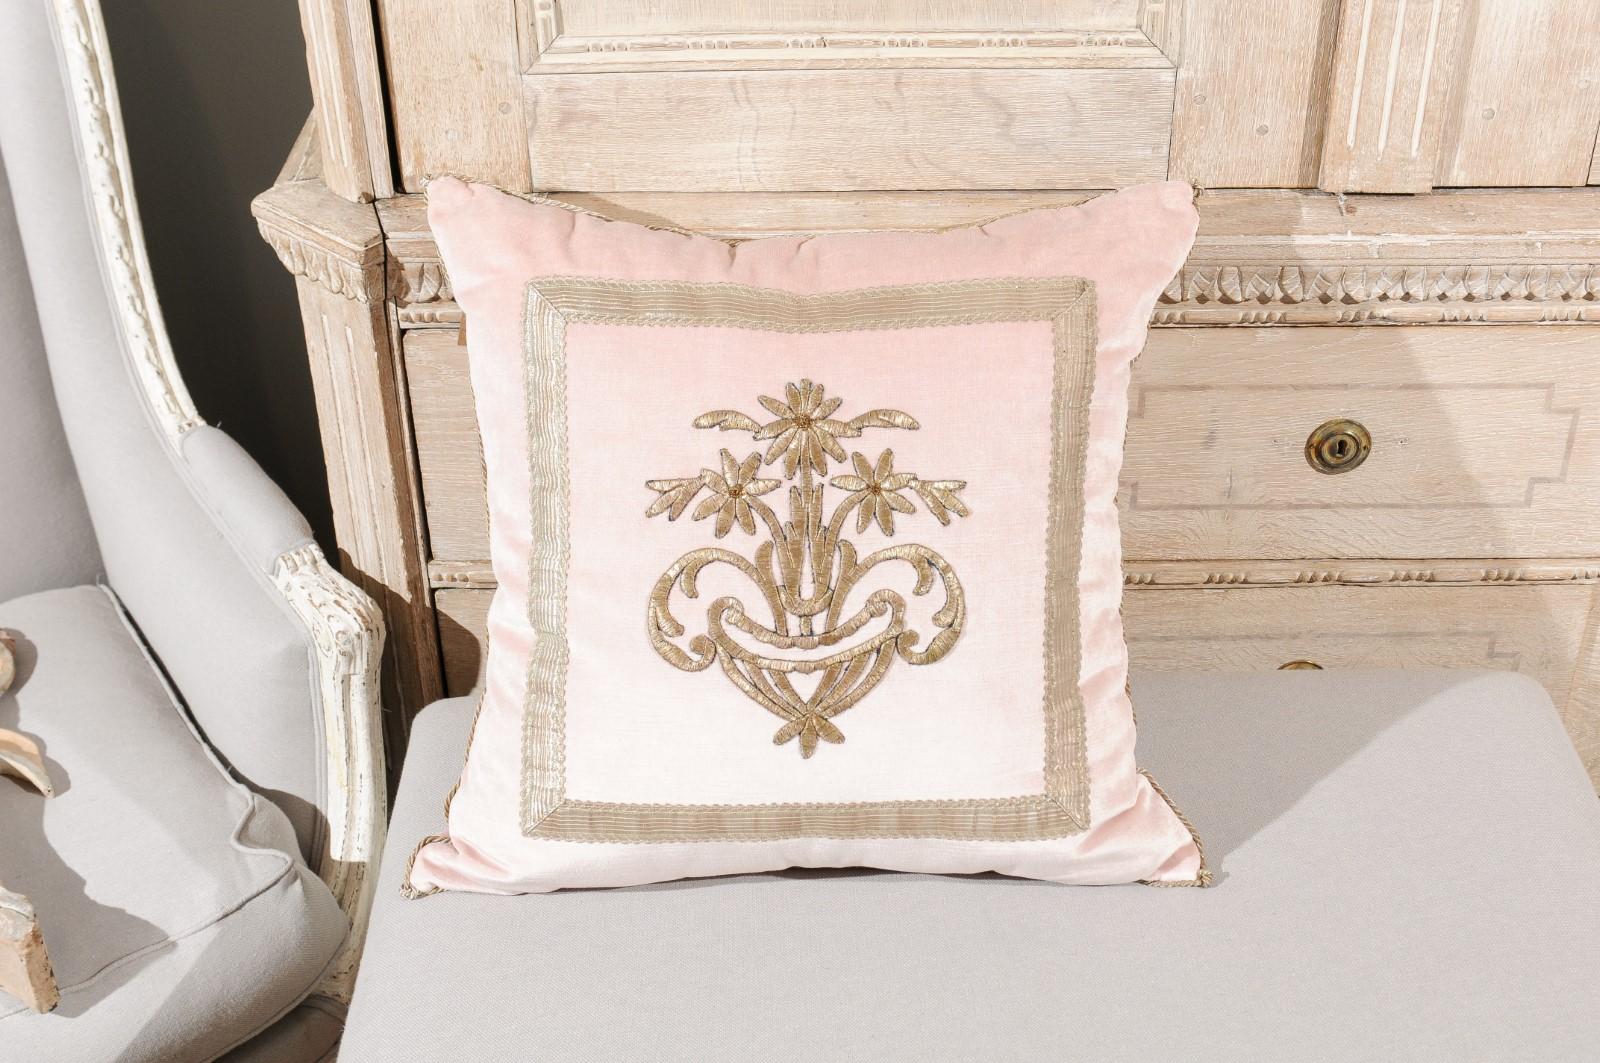 Antique Ottoman Empire Silver Metallic Embroidery on Blush Pink Velvet Pillow 3